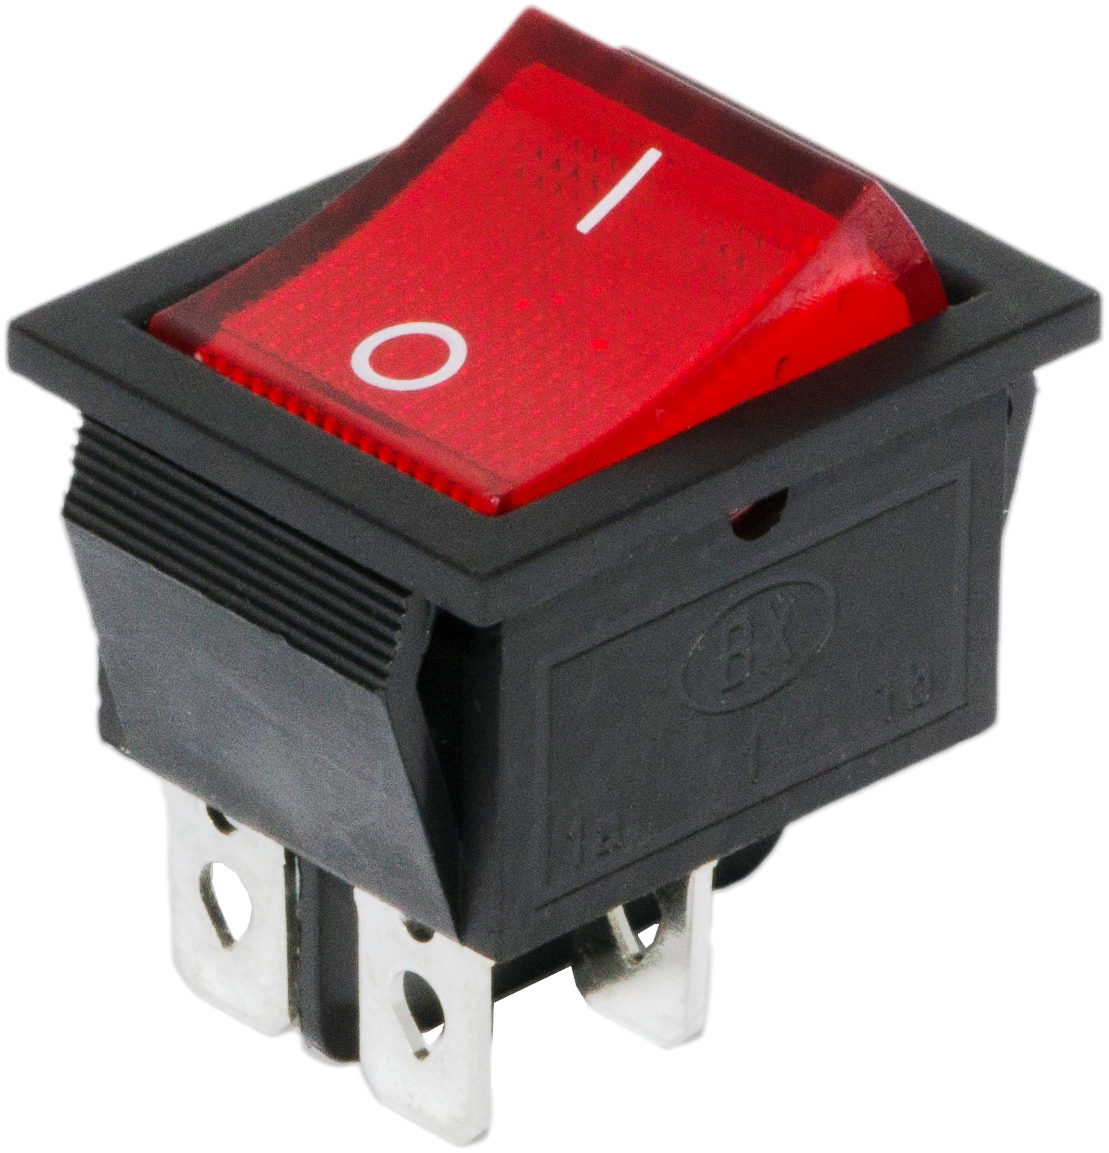 10pcs Red Light Rocker Switch 4-Pin Current 16A 250V AC 20A 125V AC Power Button 